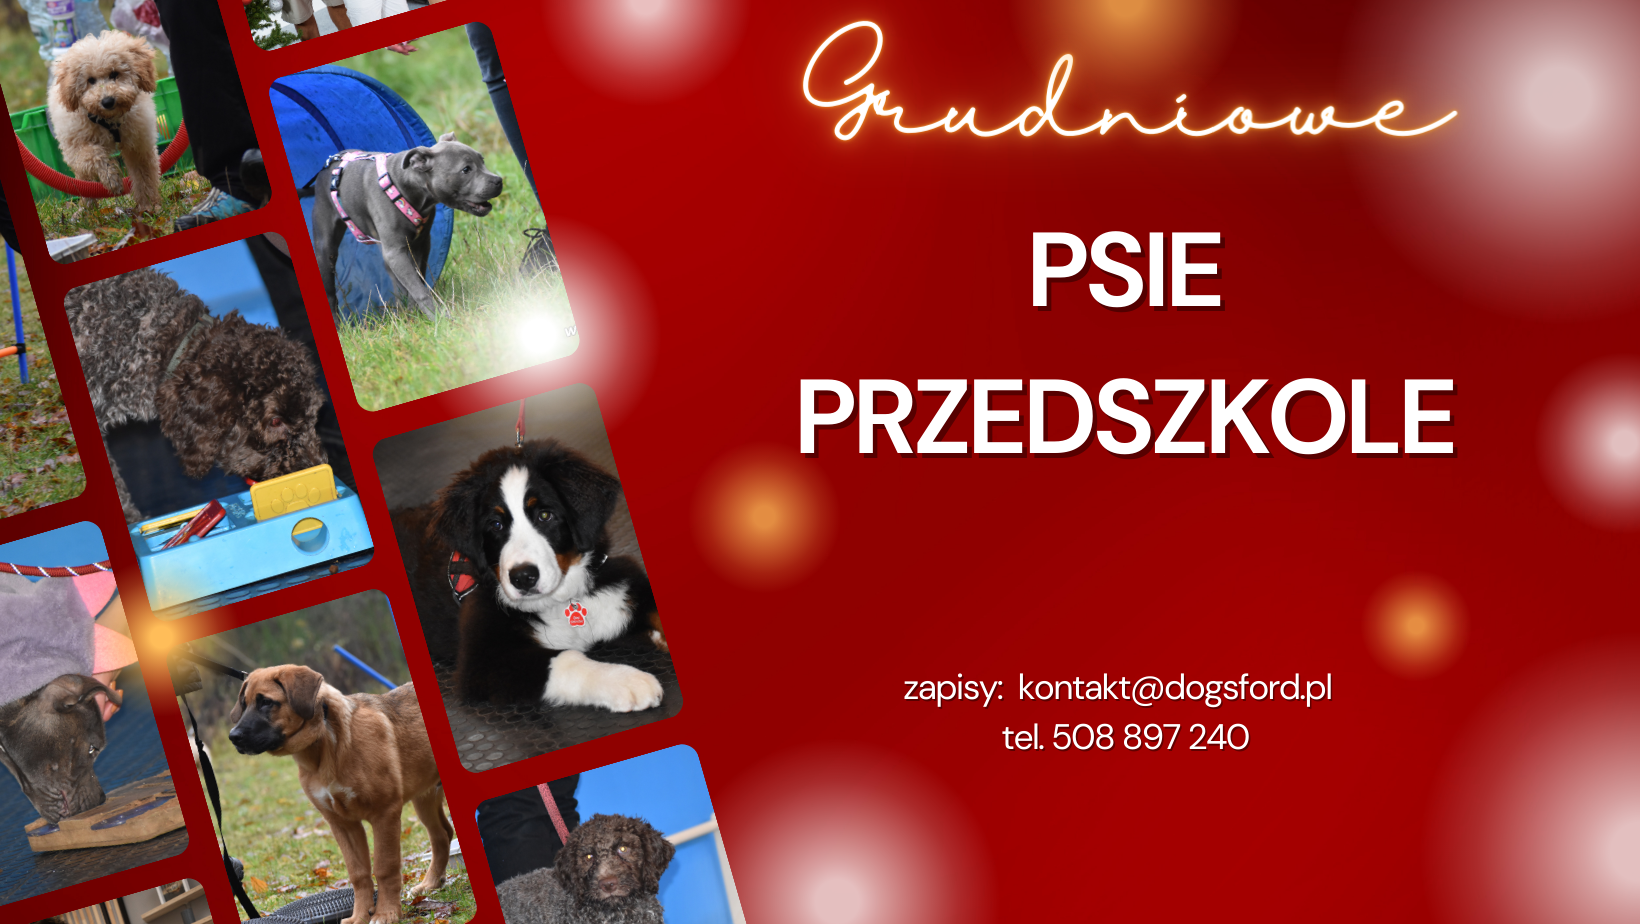 You are currently viewing Grudniowe psie przedszkole